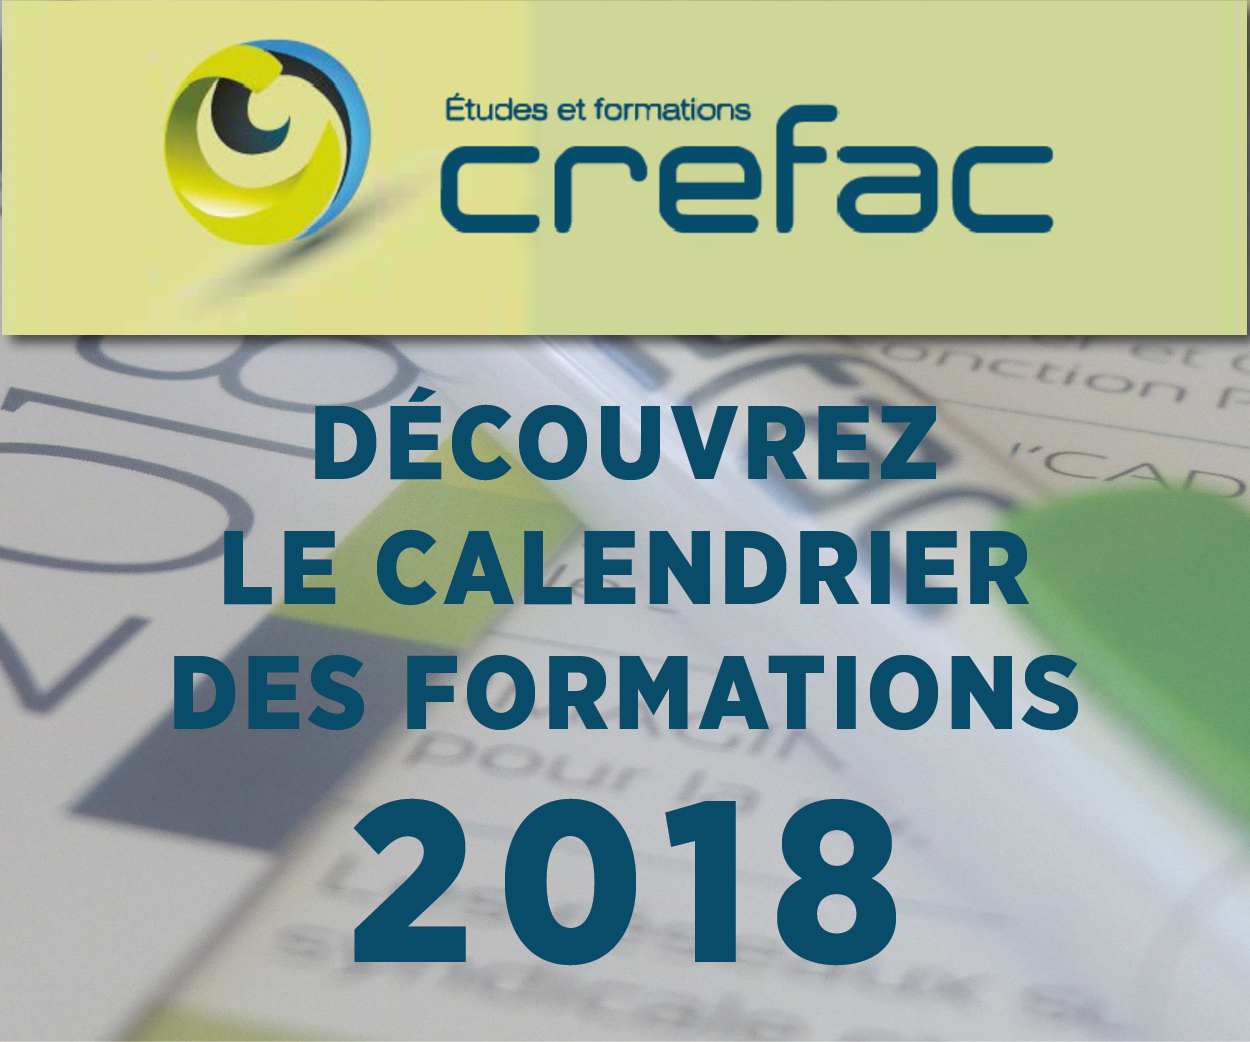 CREFAC : Le calendrier 2018 des formations